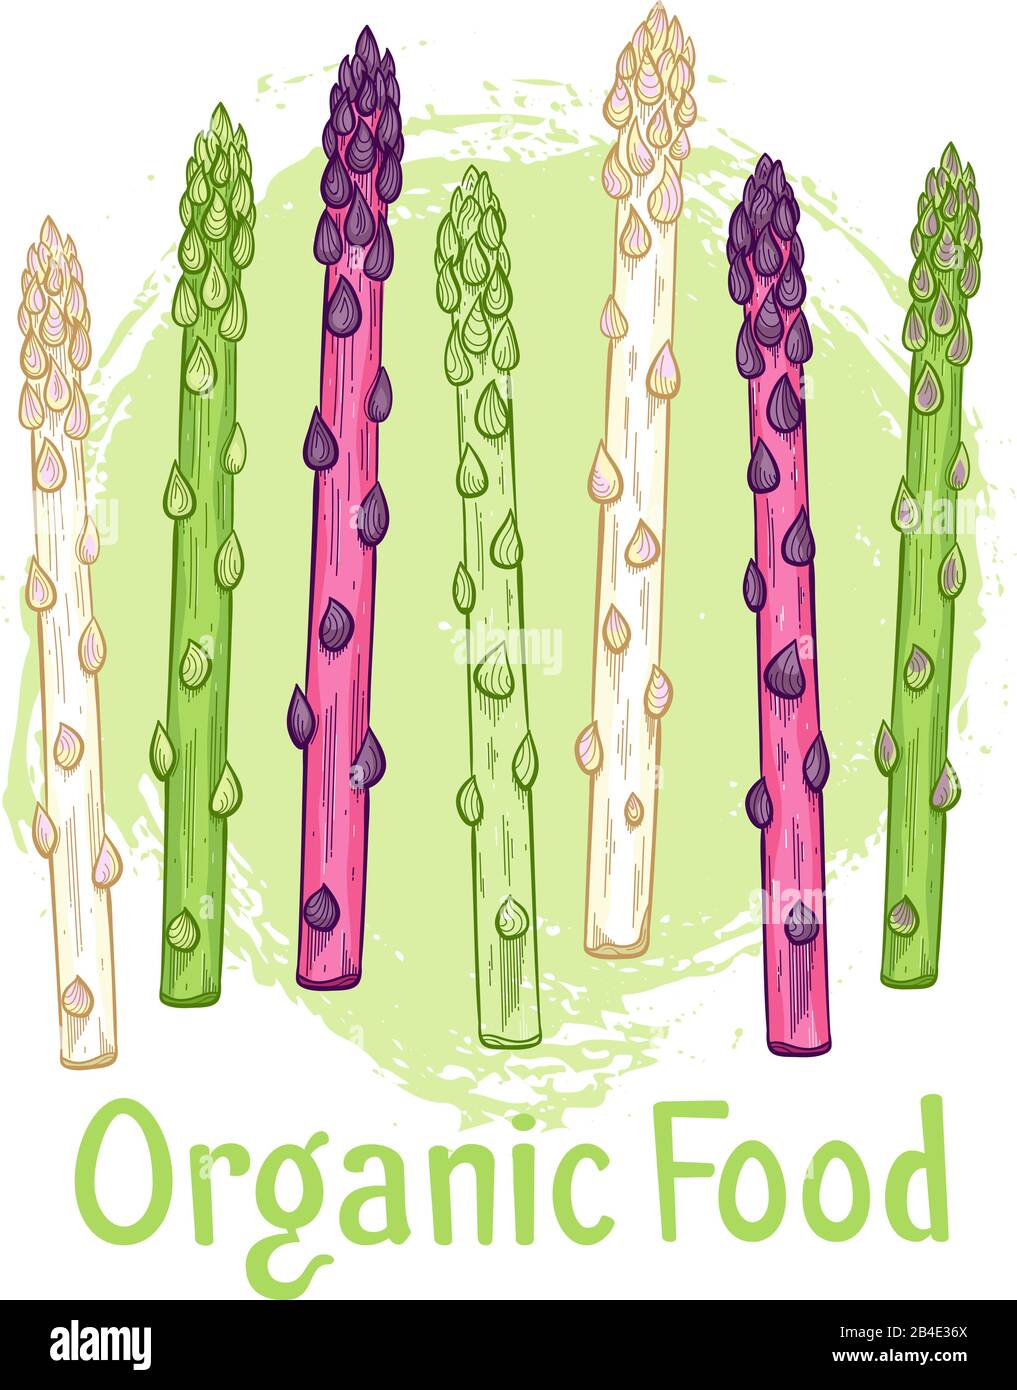 Organic asparagus market hand drawn Stock Vector